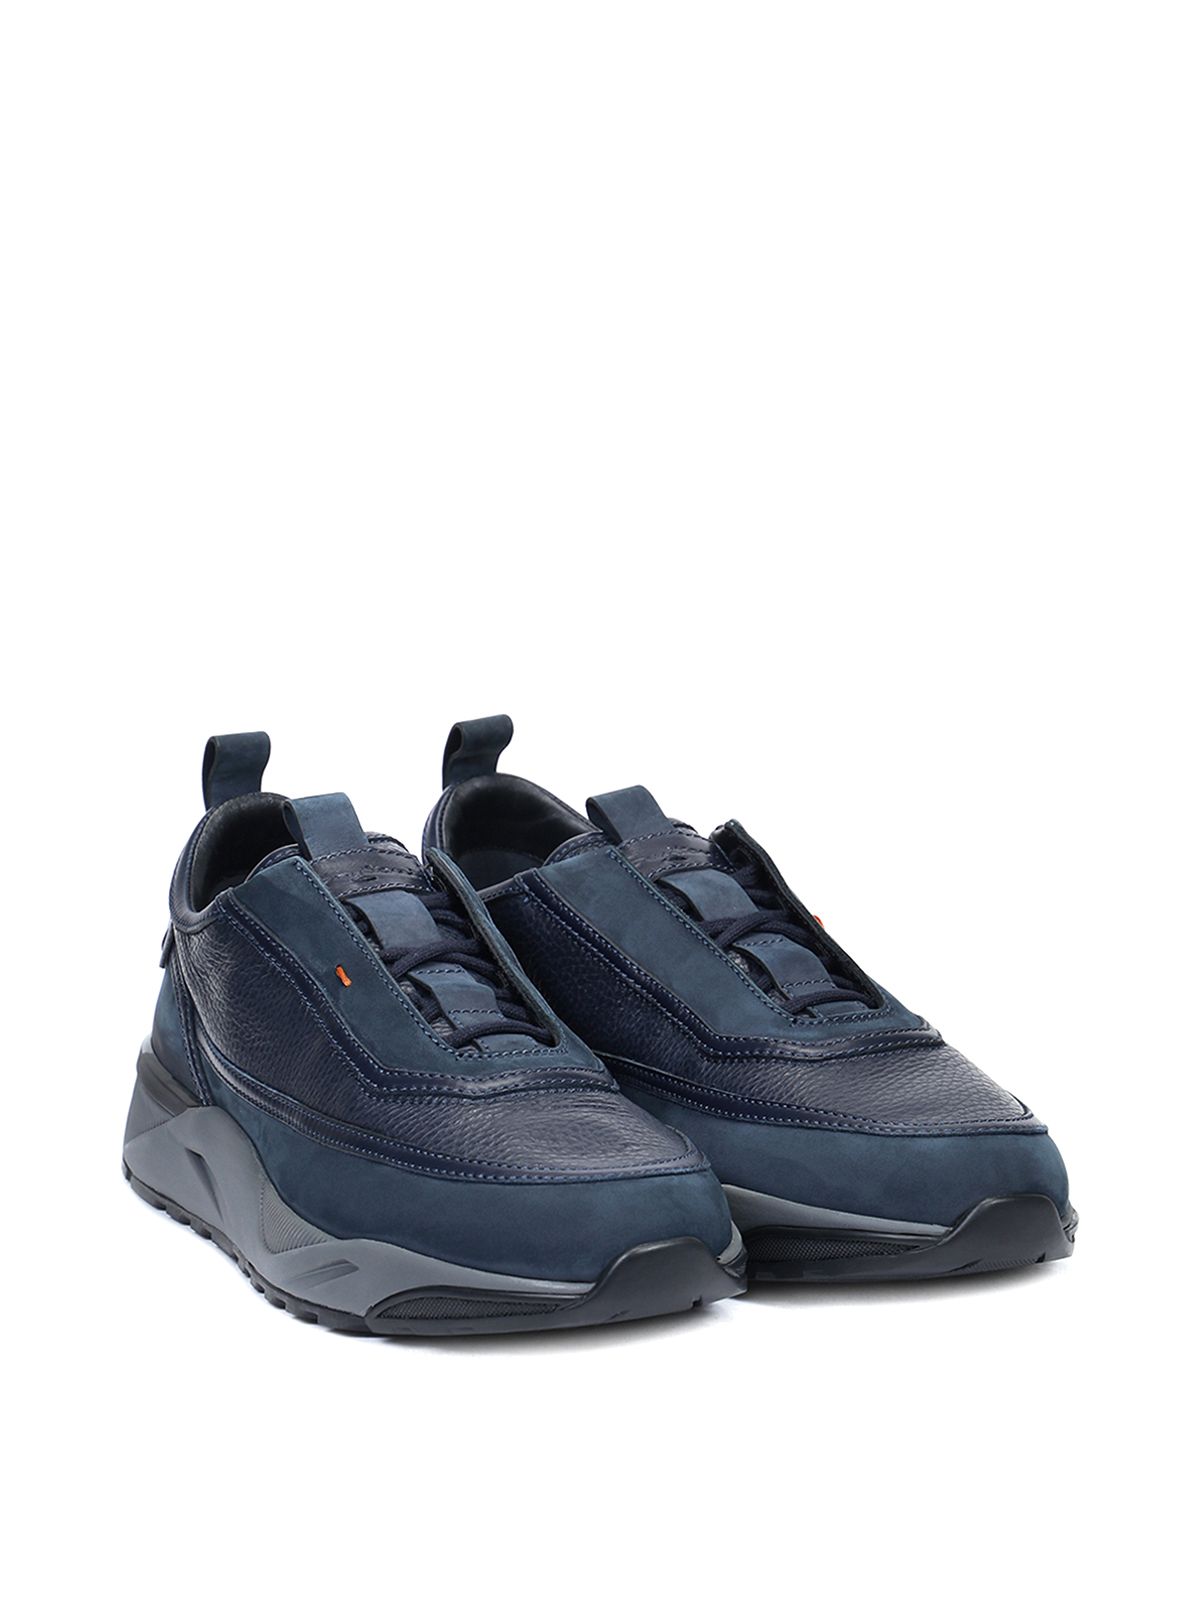 Trainers Santoni - Shoes - MBIO21545ANERRBNU60 | Shop online at iKRIX